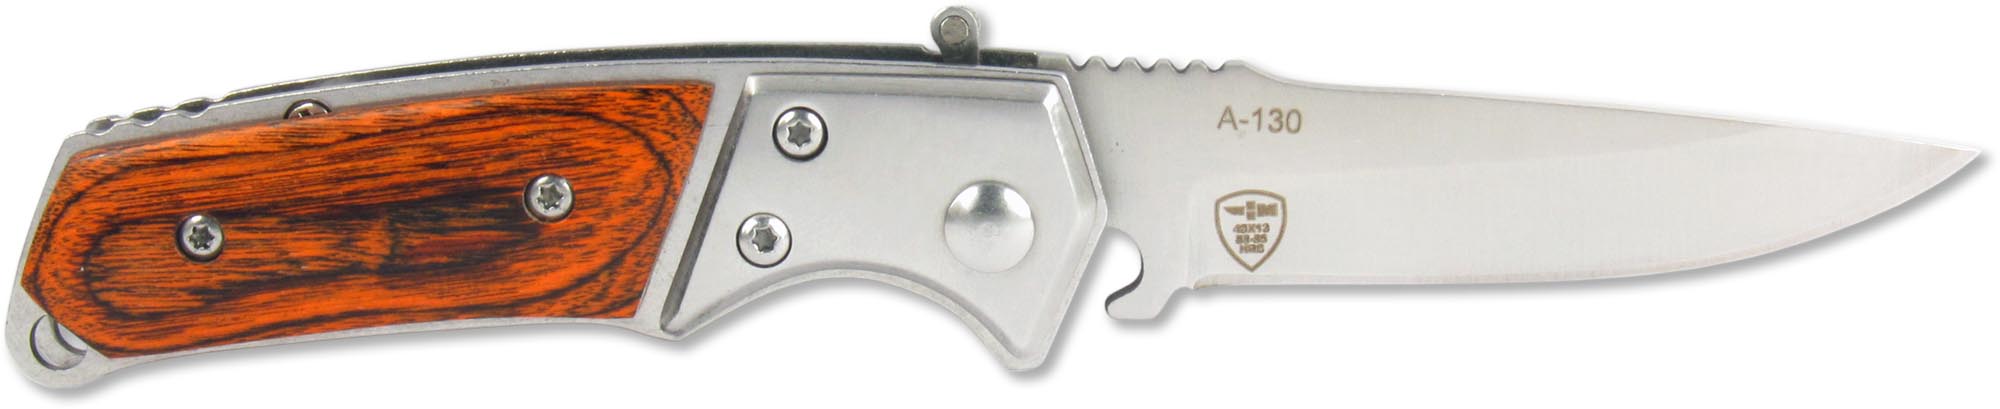 Нож автоматический Чёткий расклад A-130